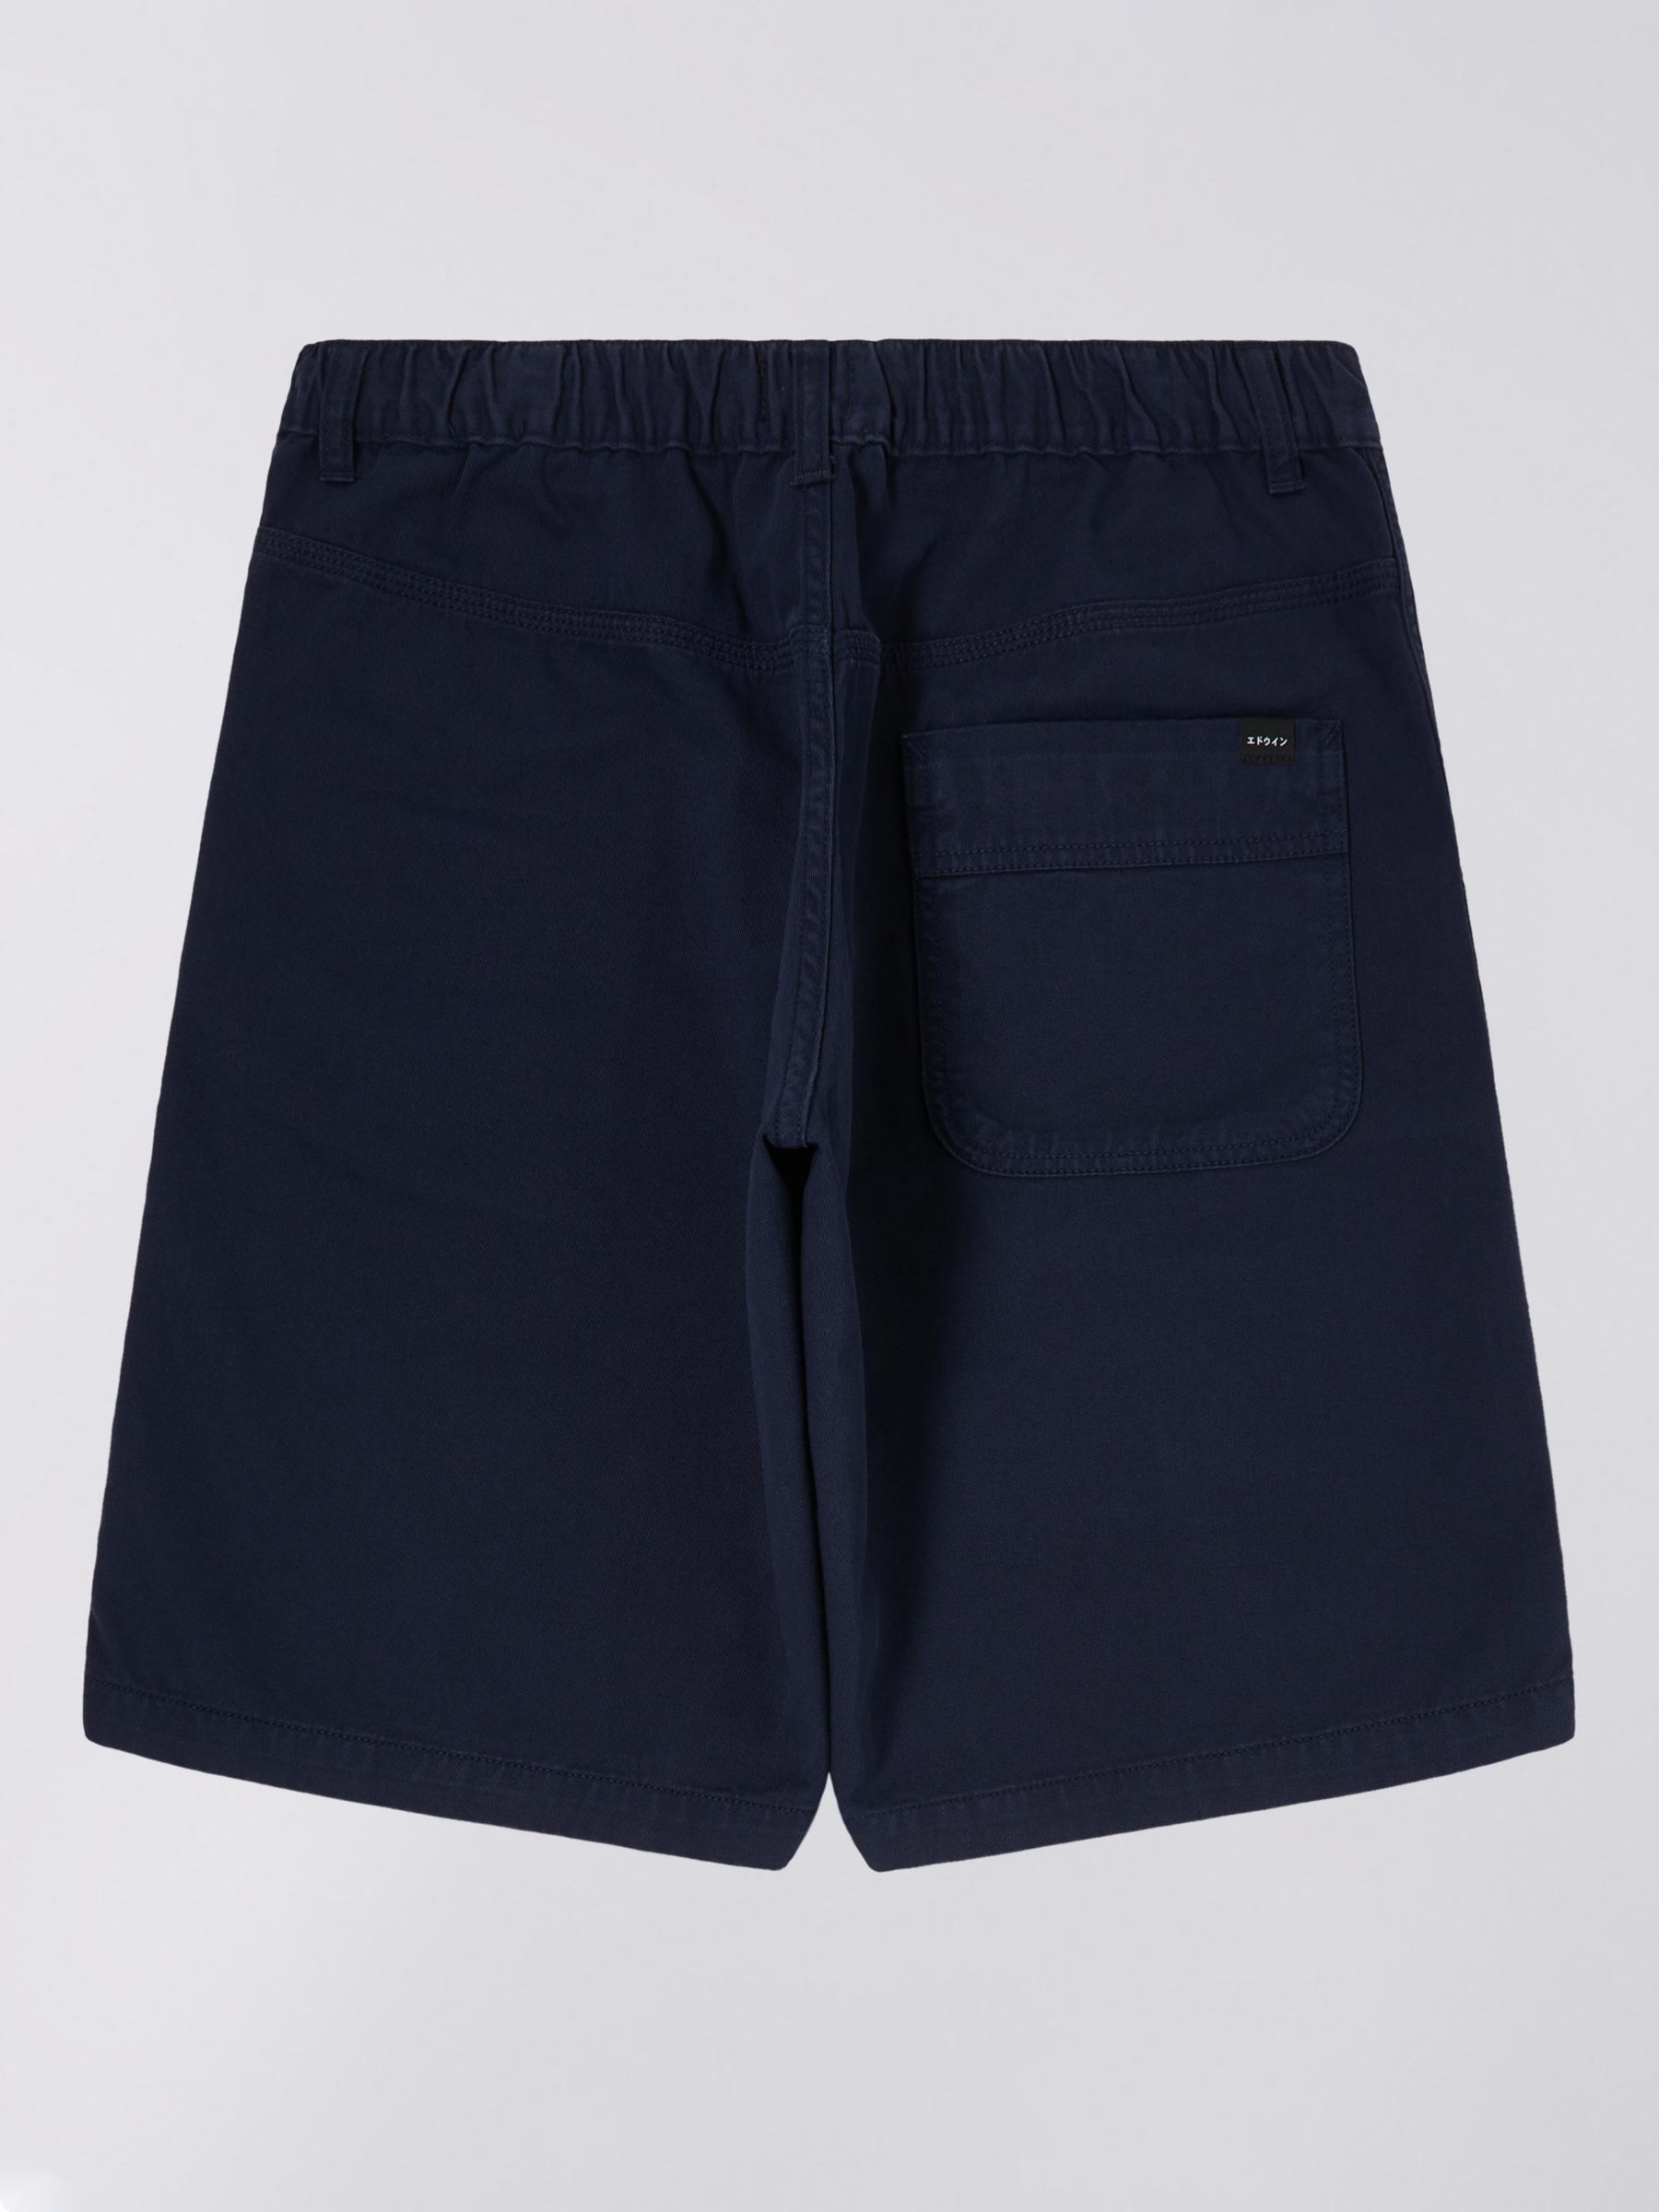 Buy Edwin Gangis Twill Shorts, Navy Online at johnlewis.com